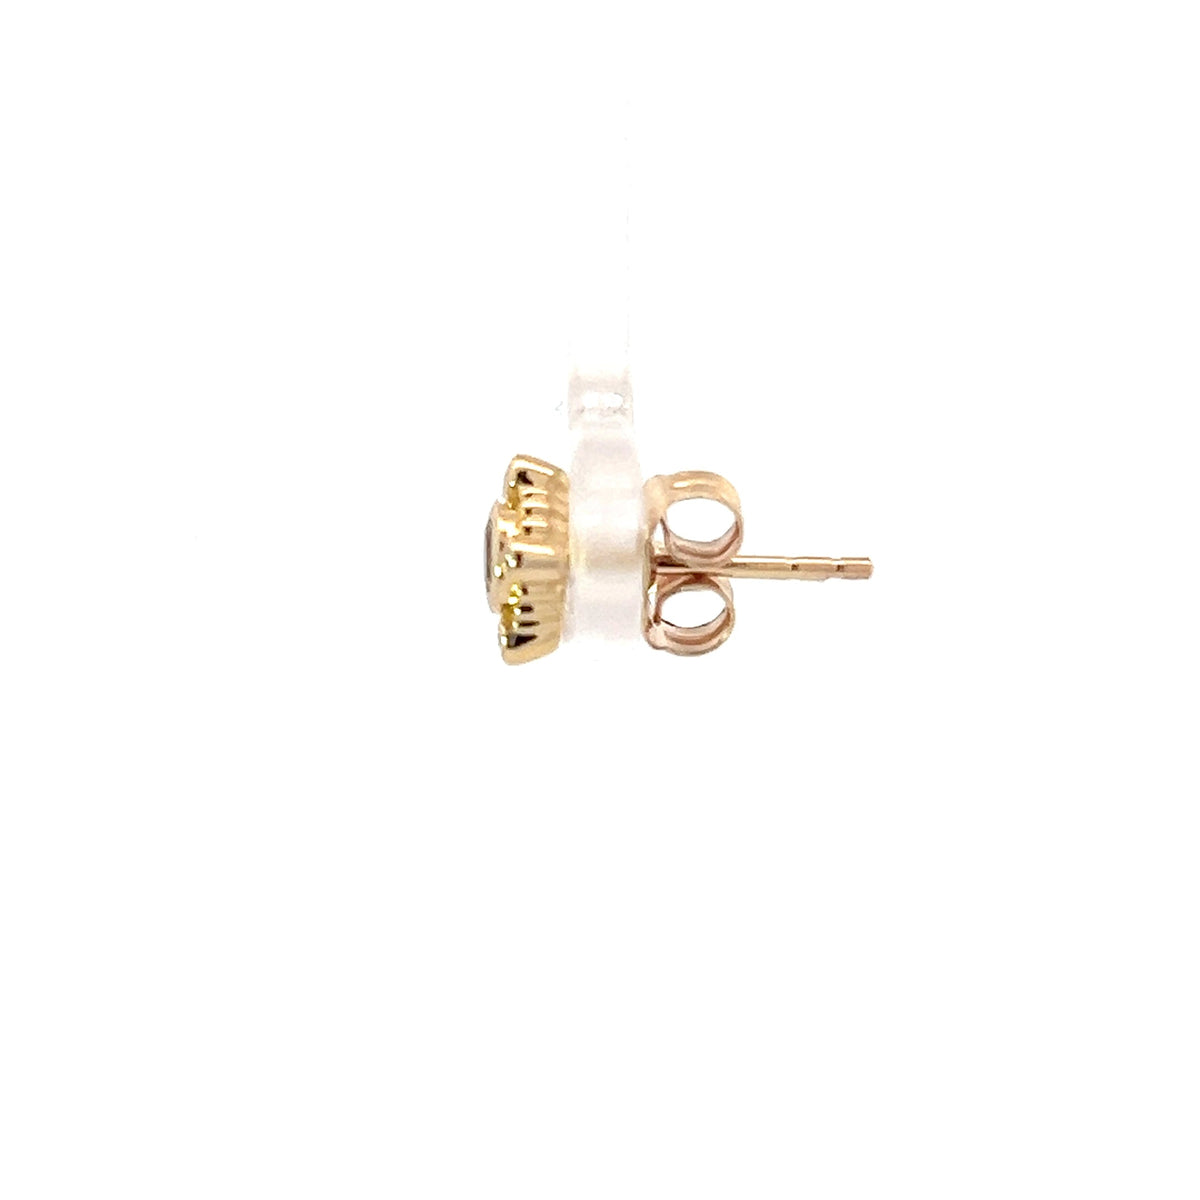 TRACKING - 10K Yellow Gold Peridot and Diamond Earrings